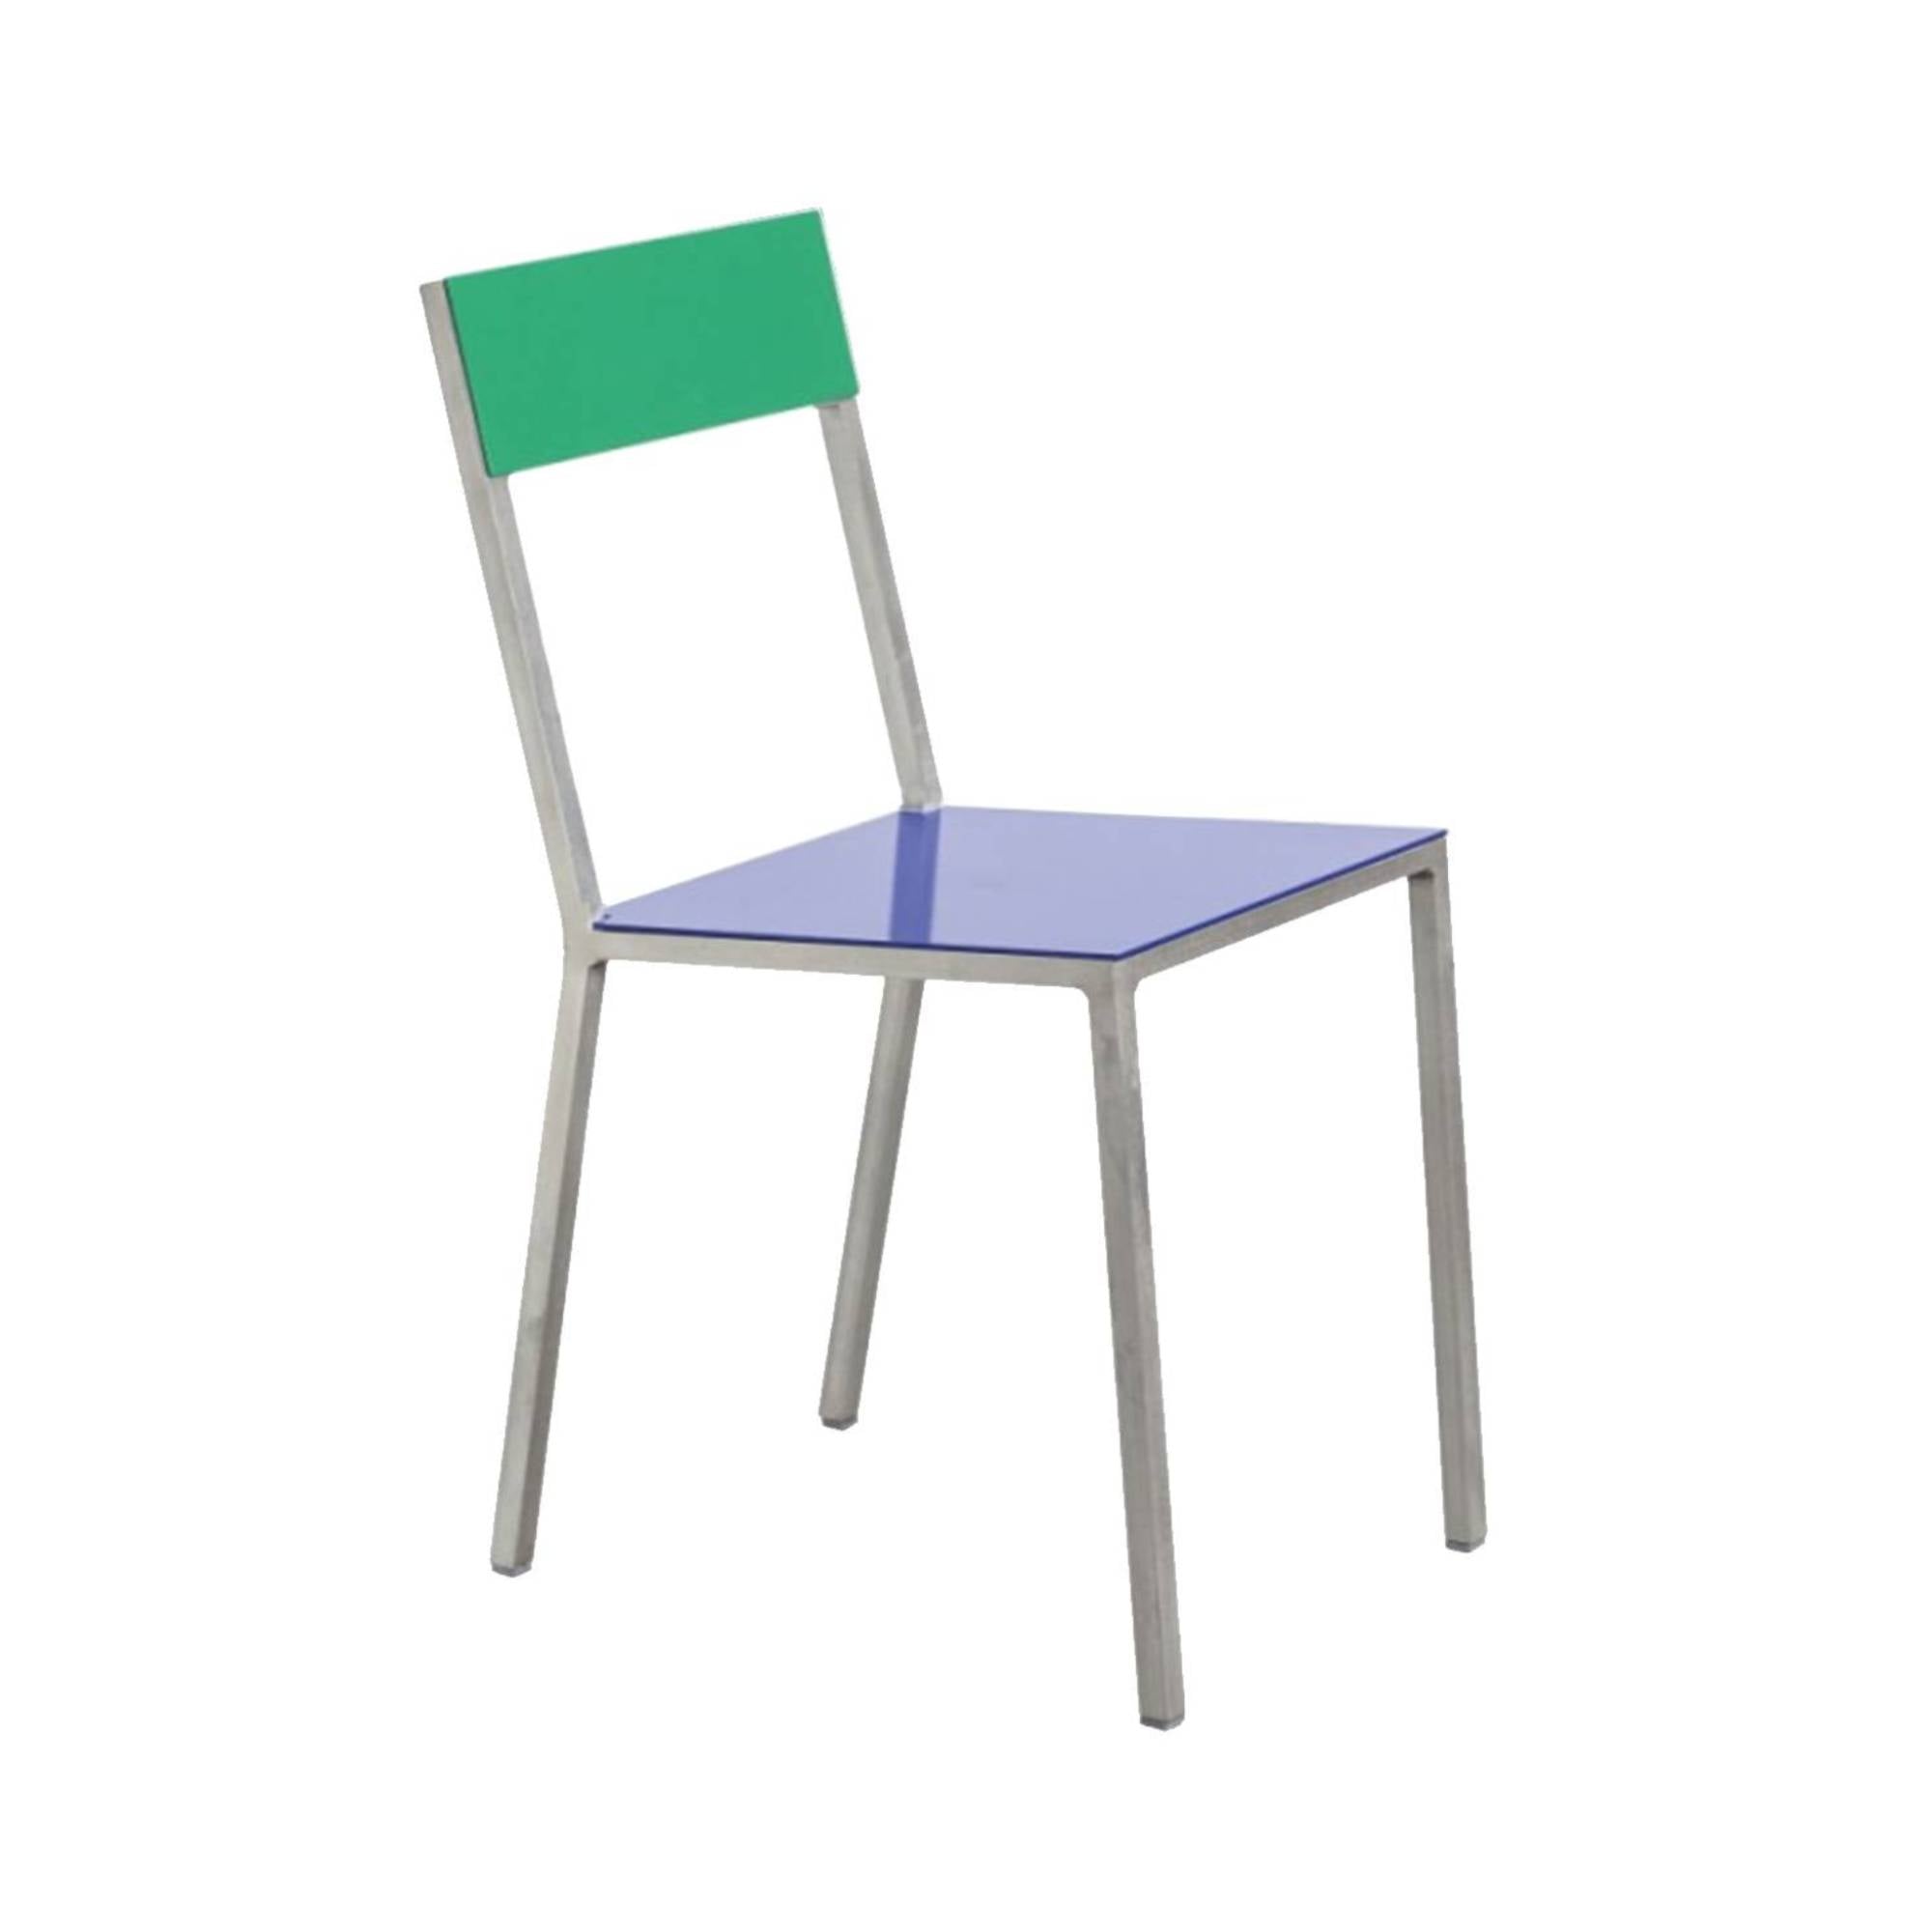 Alu Chair: Dark Blue + Green + Aluminum